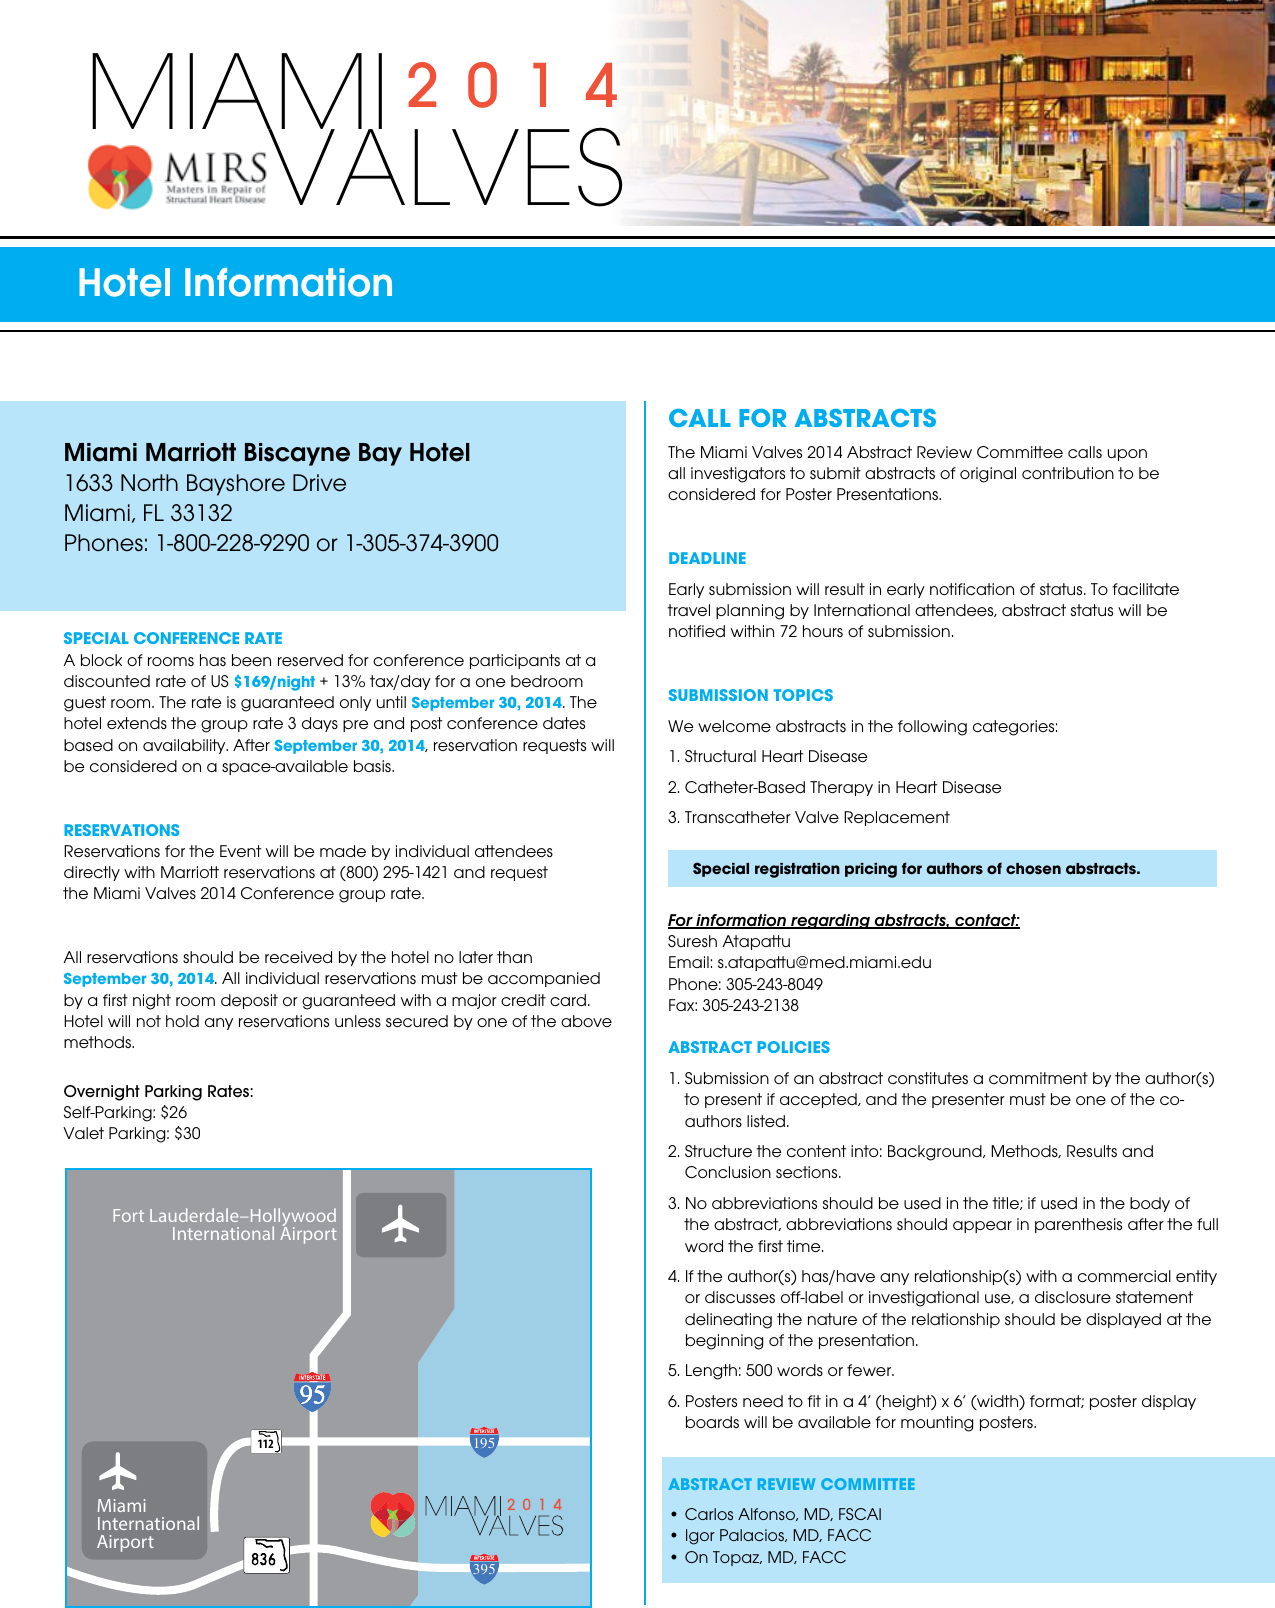 Page 6 of 8 - BROCHURE  - Miami Valves 2014 7 31 14